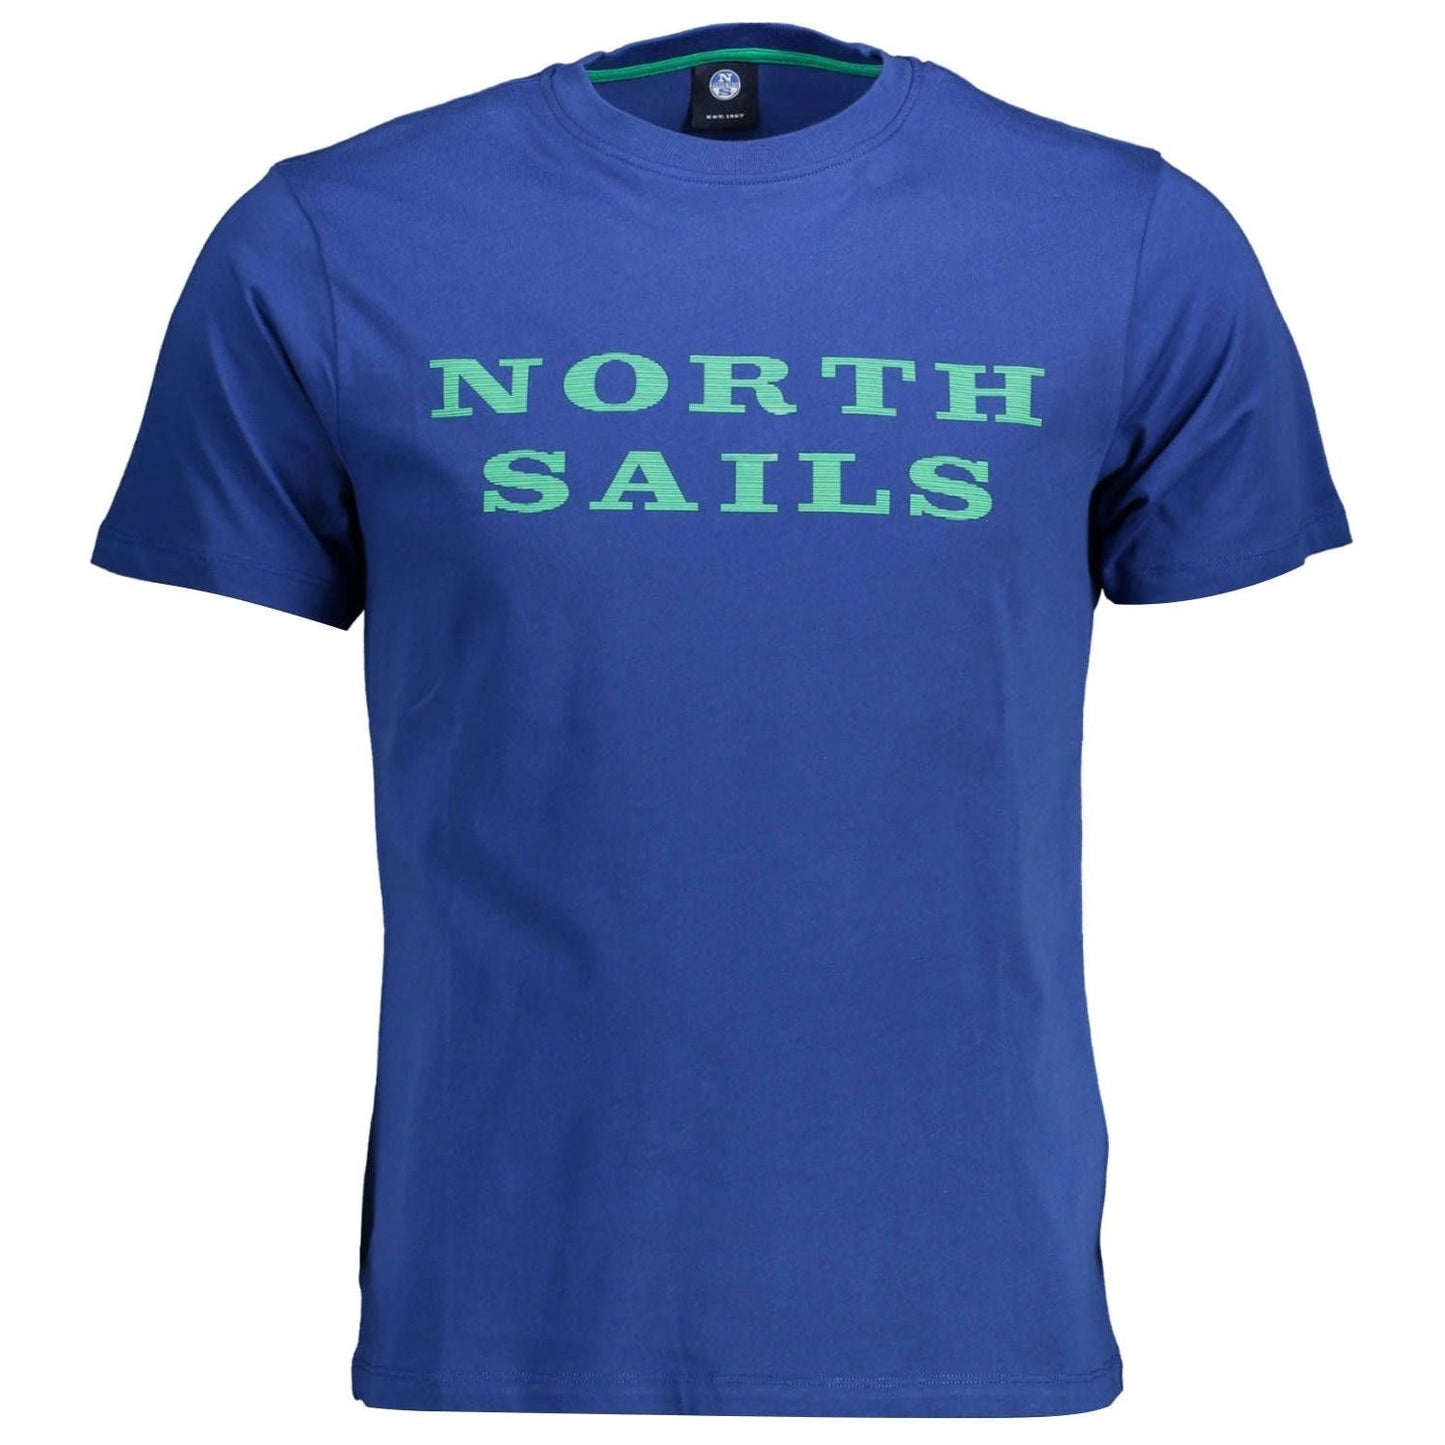 North Sails Chic Blue Print Round Neck Tee - Short Sleeves chic-blue-print-round-neck-tee-short-sleeves